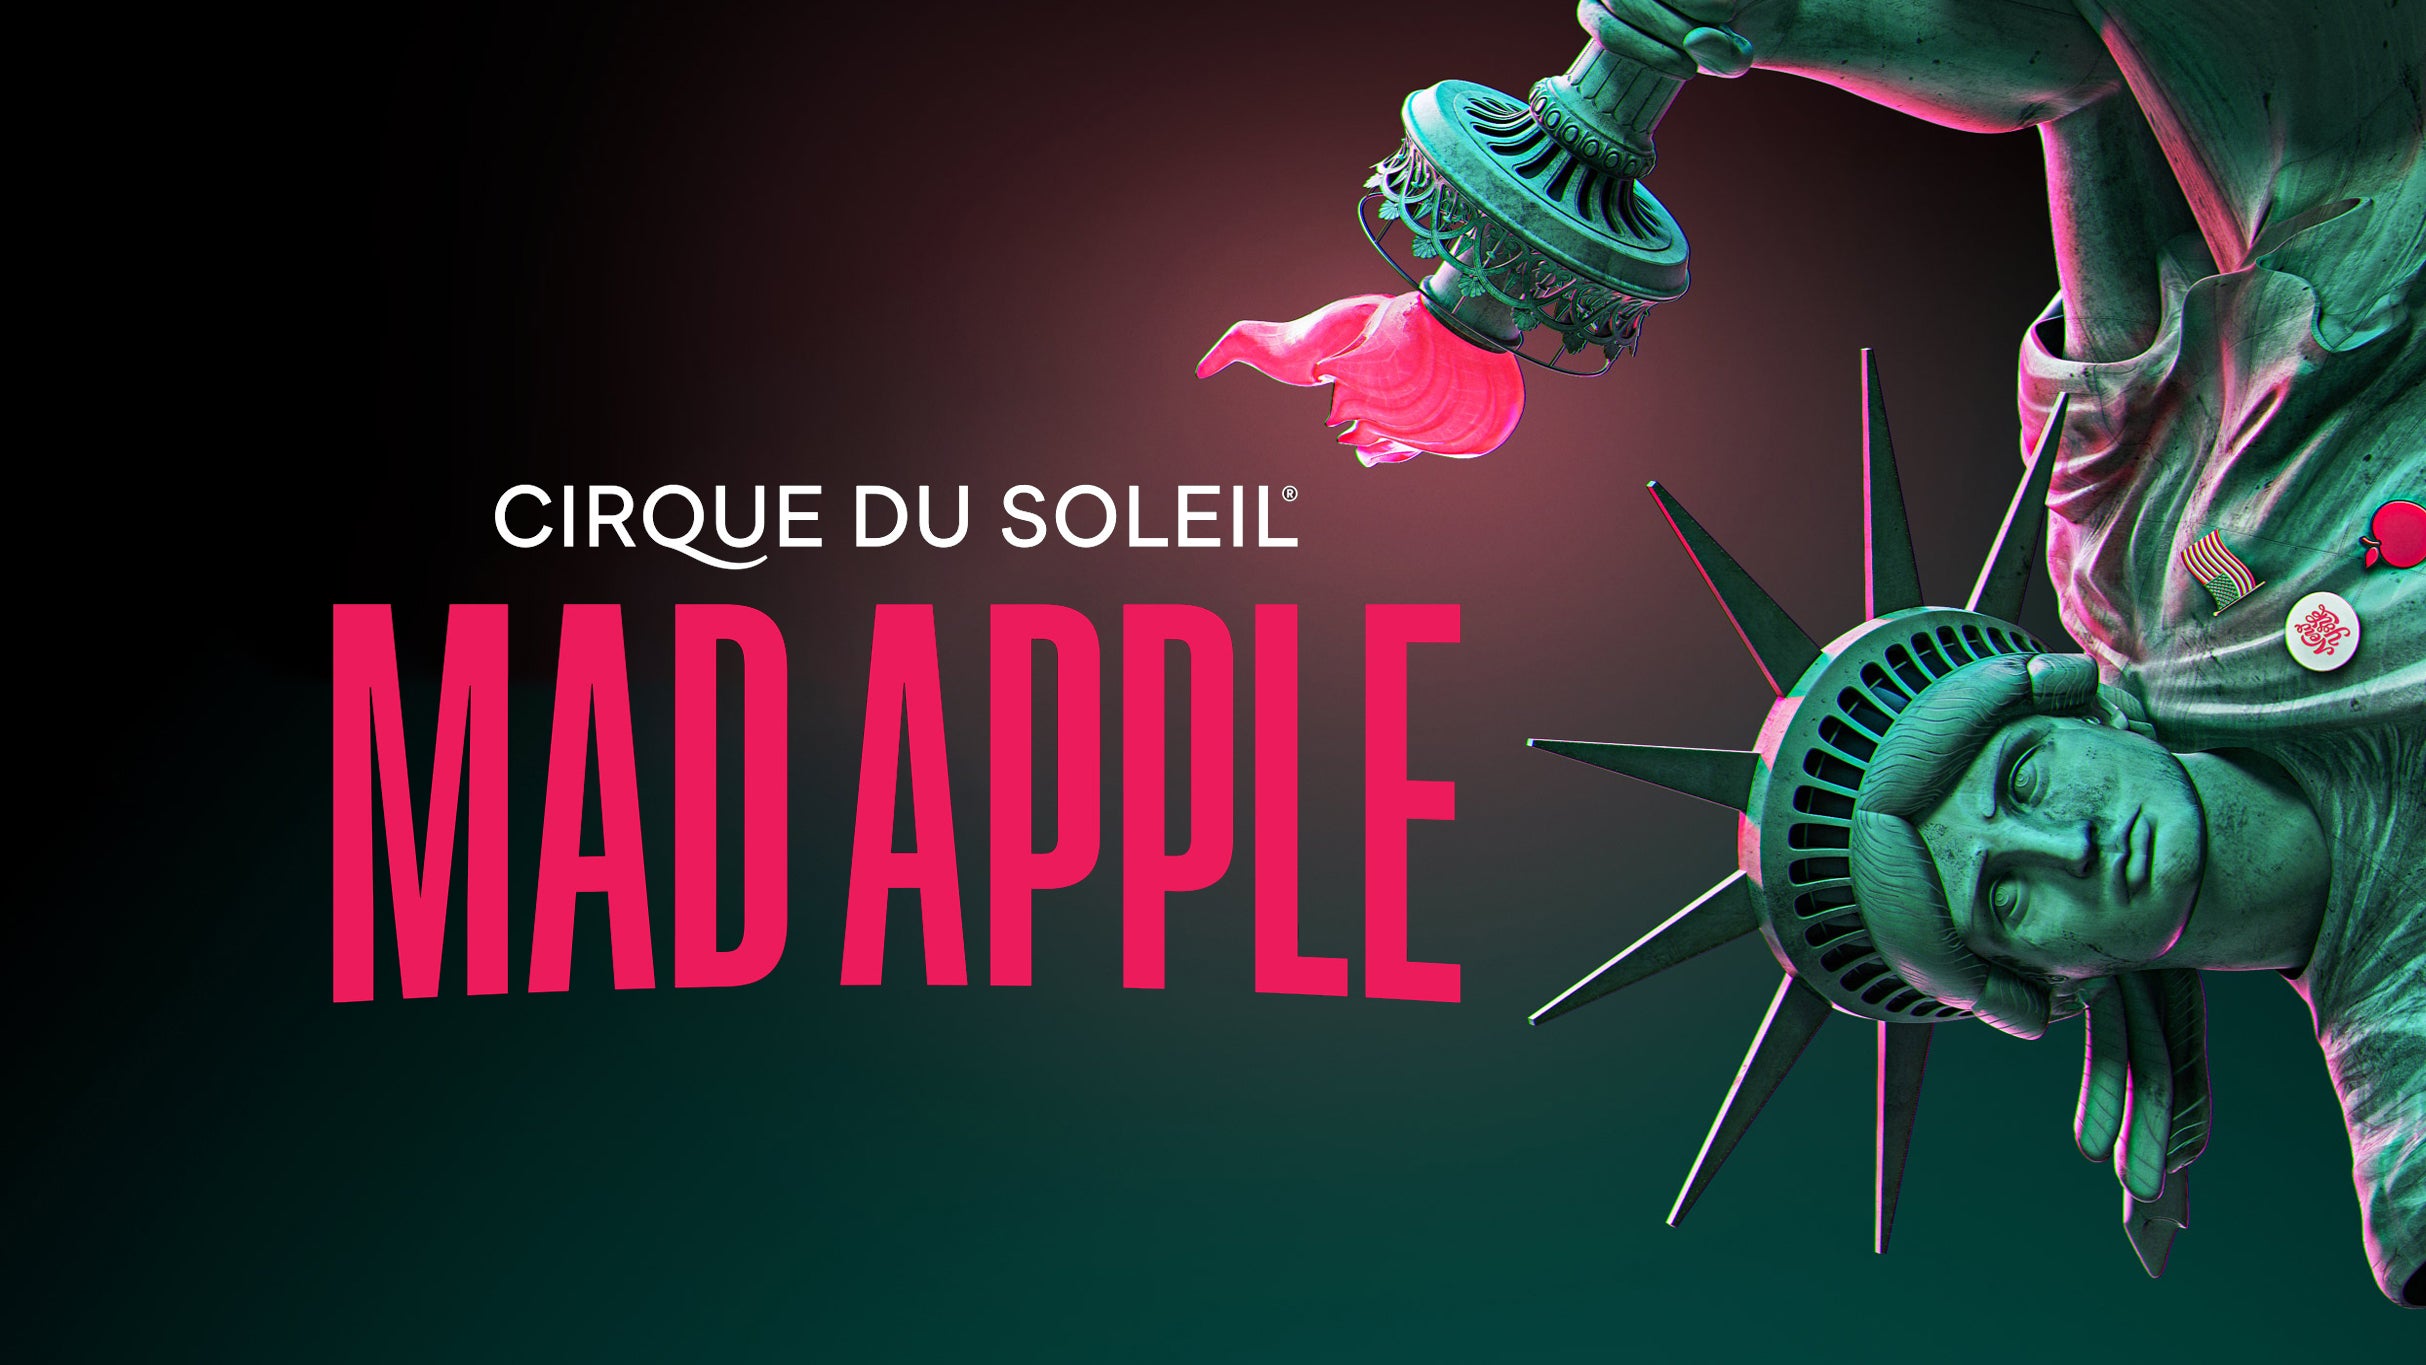 Cirque du Soleil: Mad Apple at New York-New York Theater